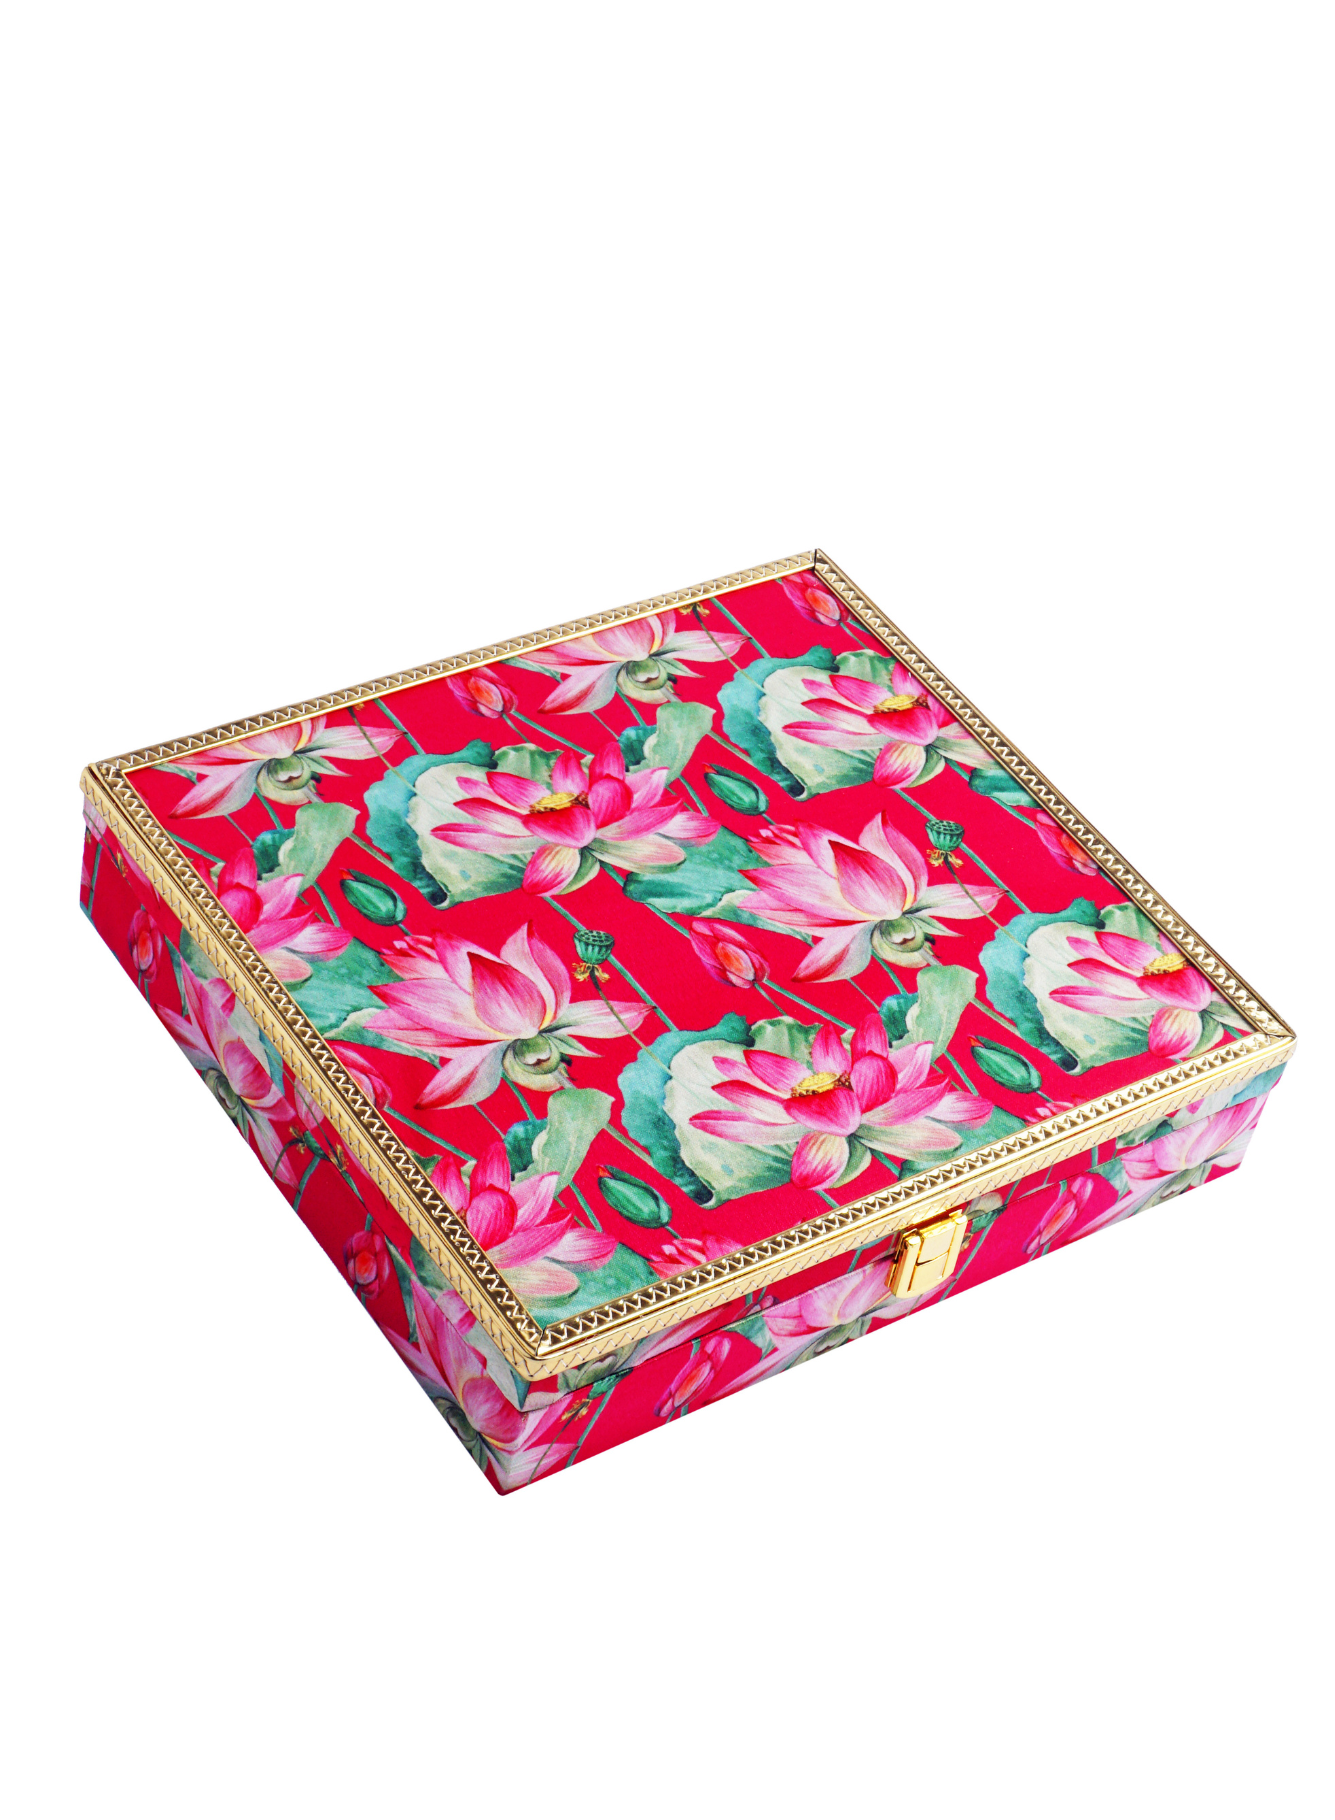 Khidri Dates with Blooming Lotus Box (50 Pcs)